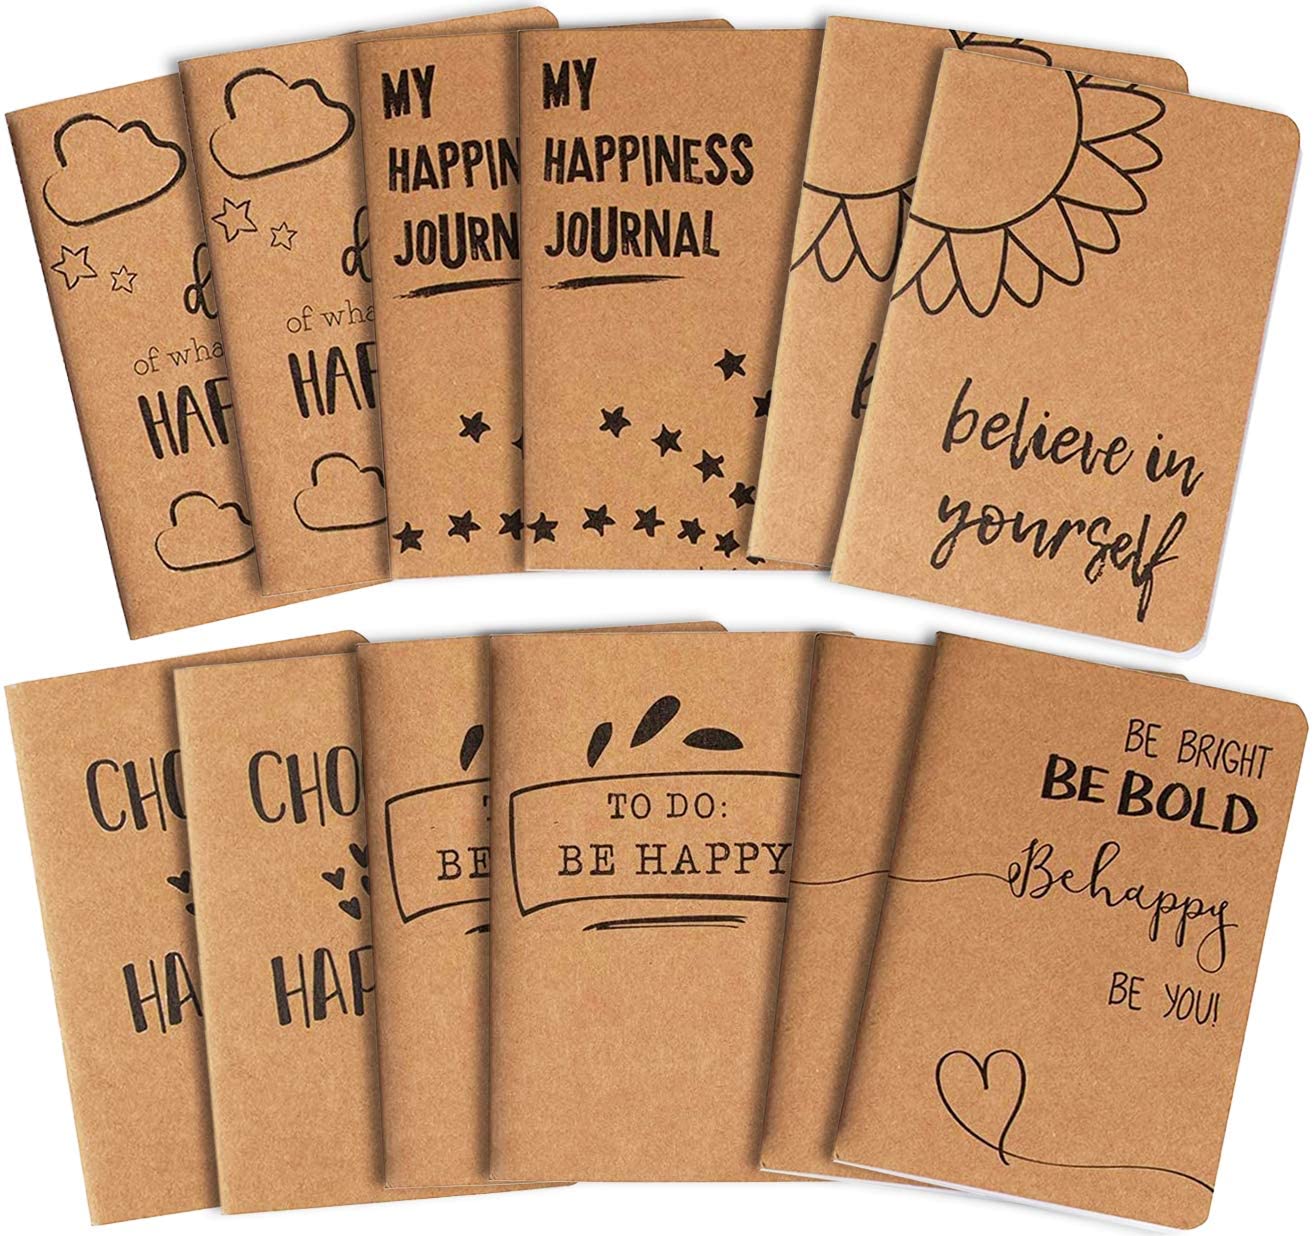 student happiness journals